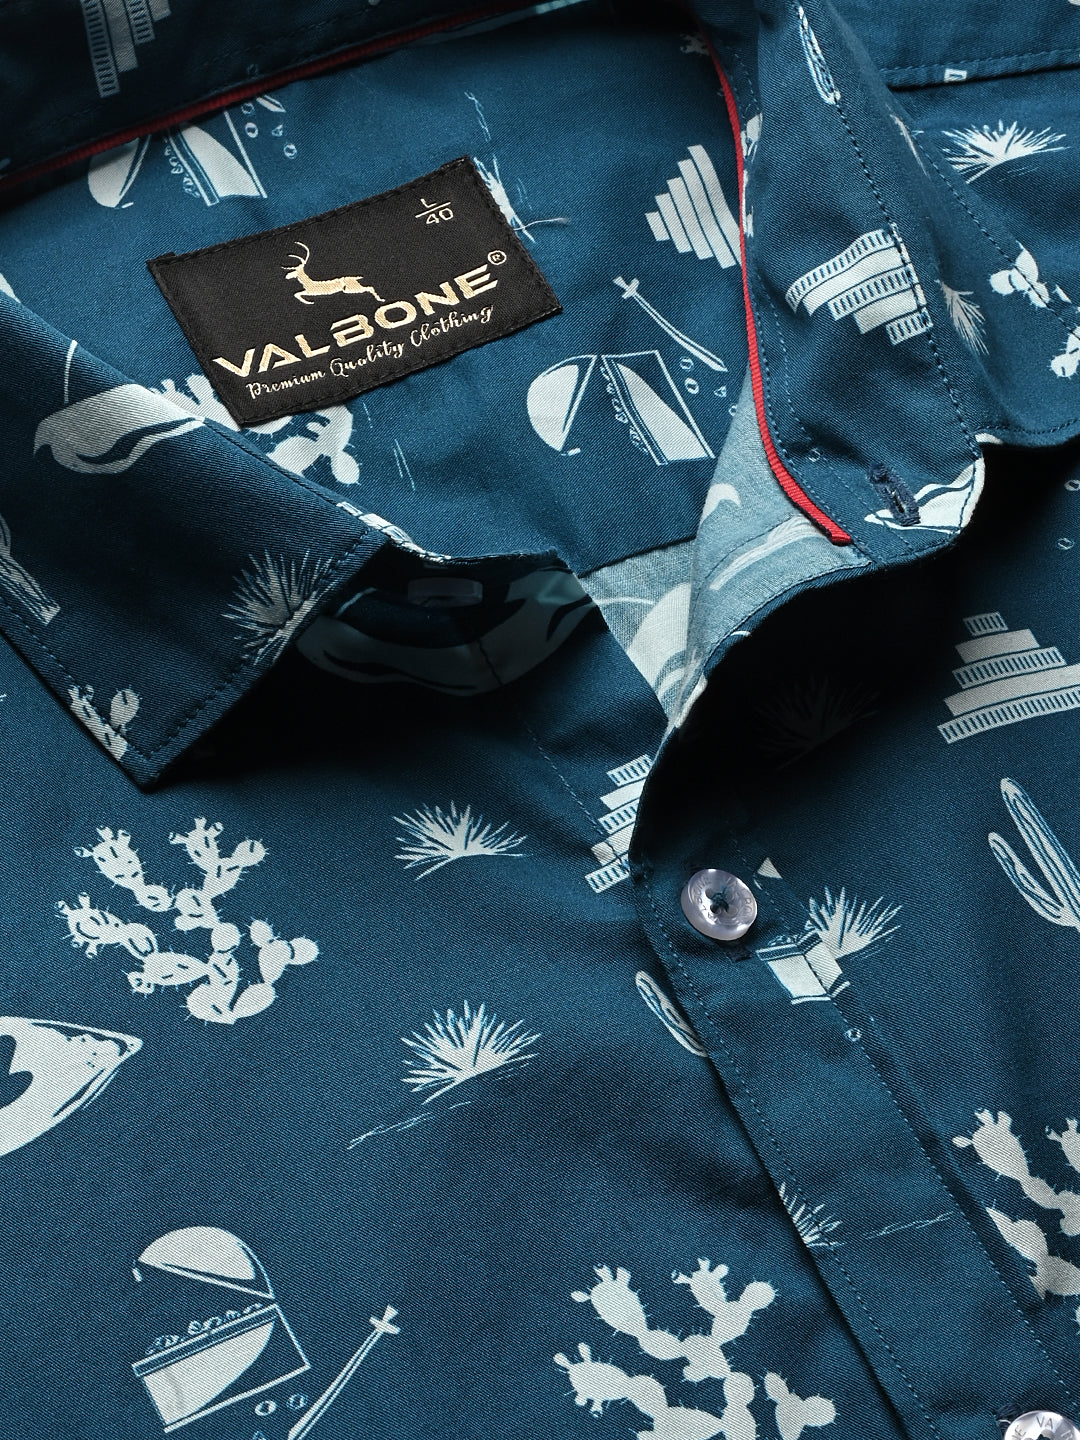 Valbone Men Printed Giza Cotton Casual Shirt